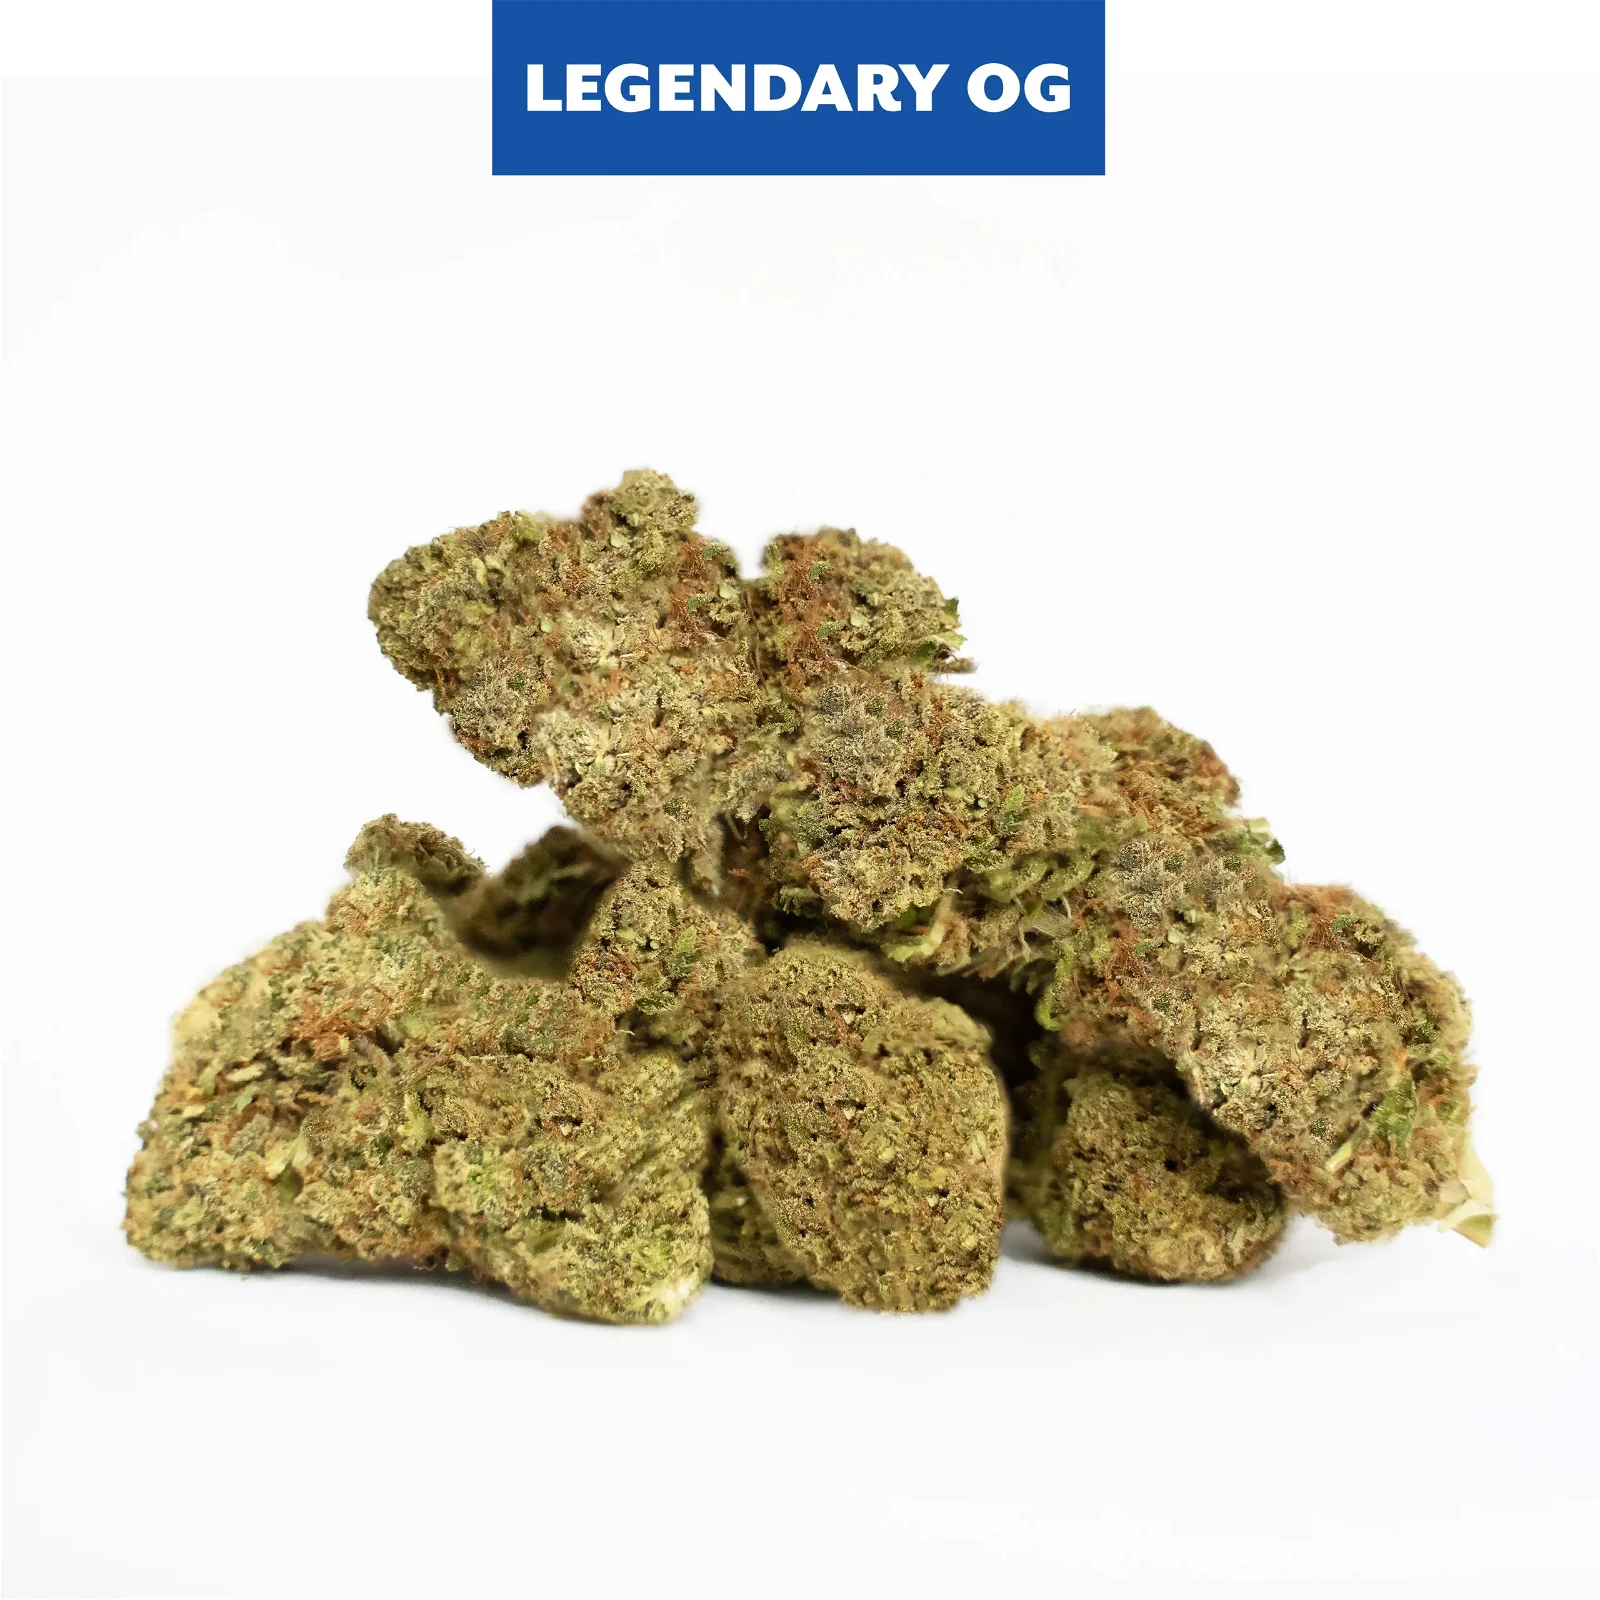 Legendary OG CBD Cannabis Light